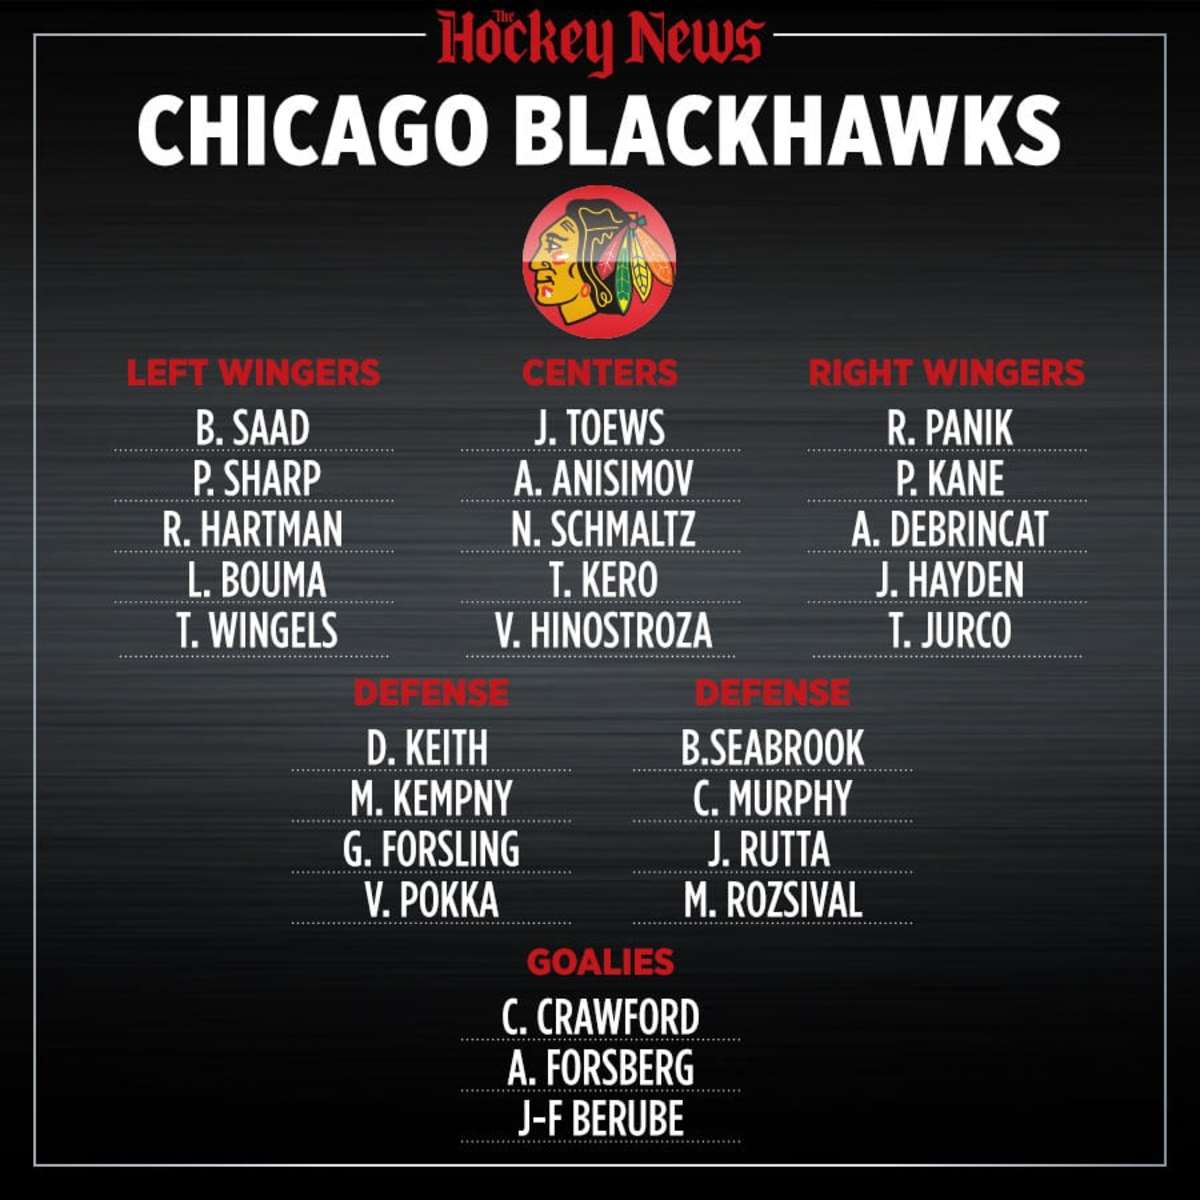 Chicago Blackhawks Salary Cap Chart